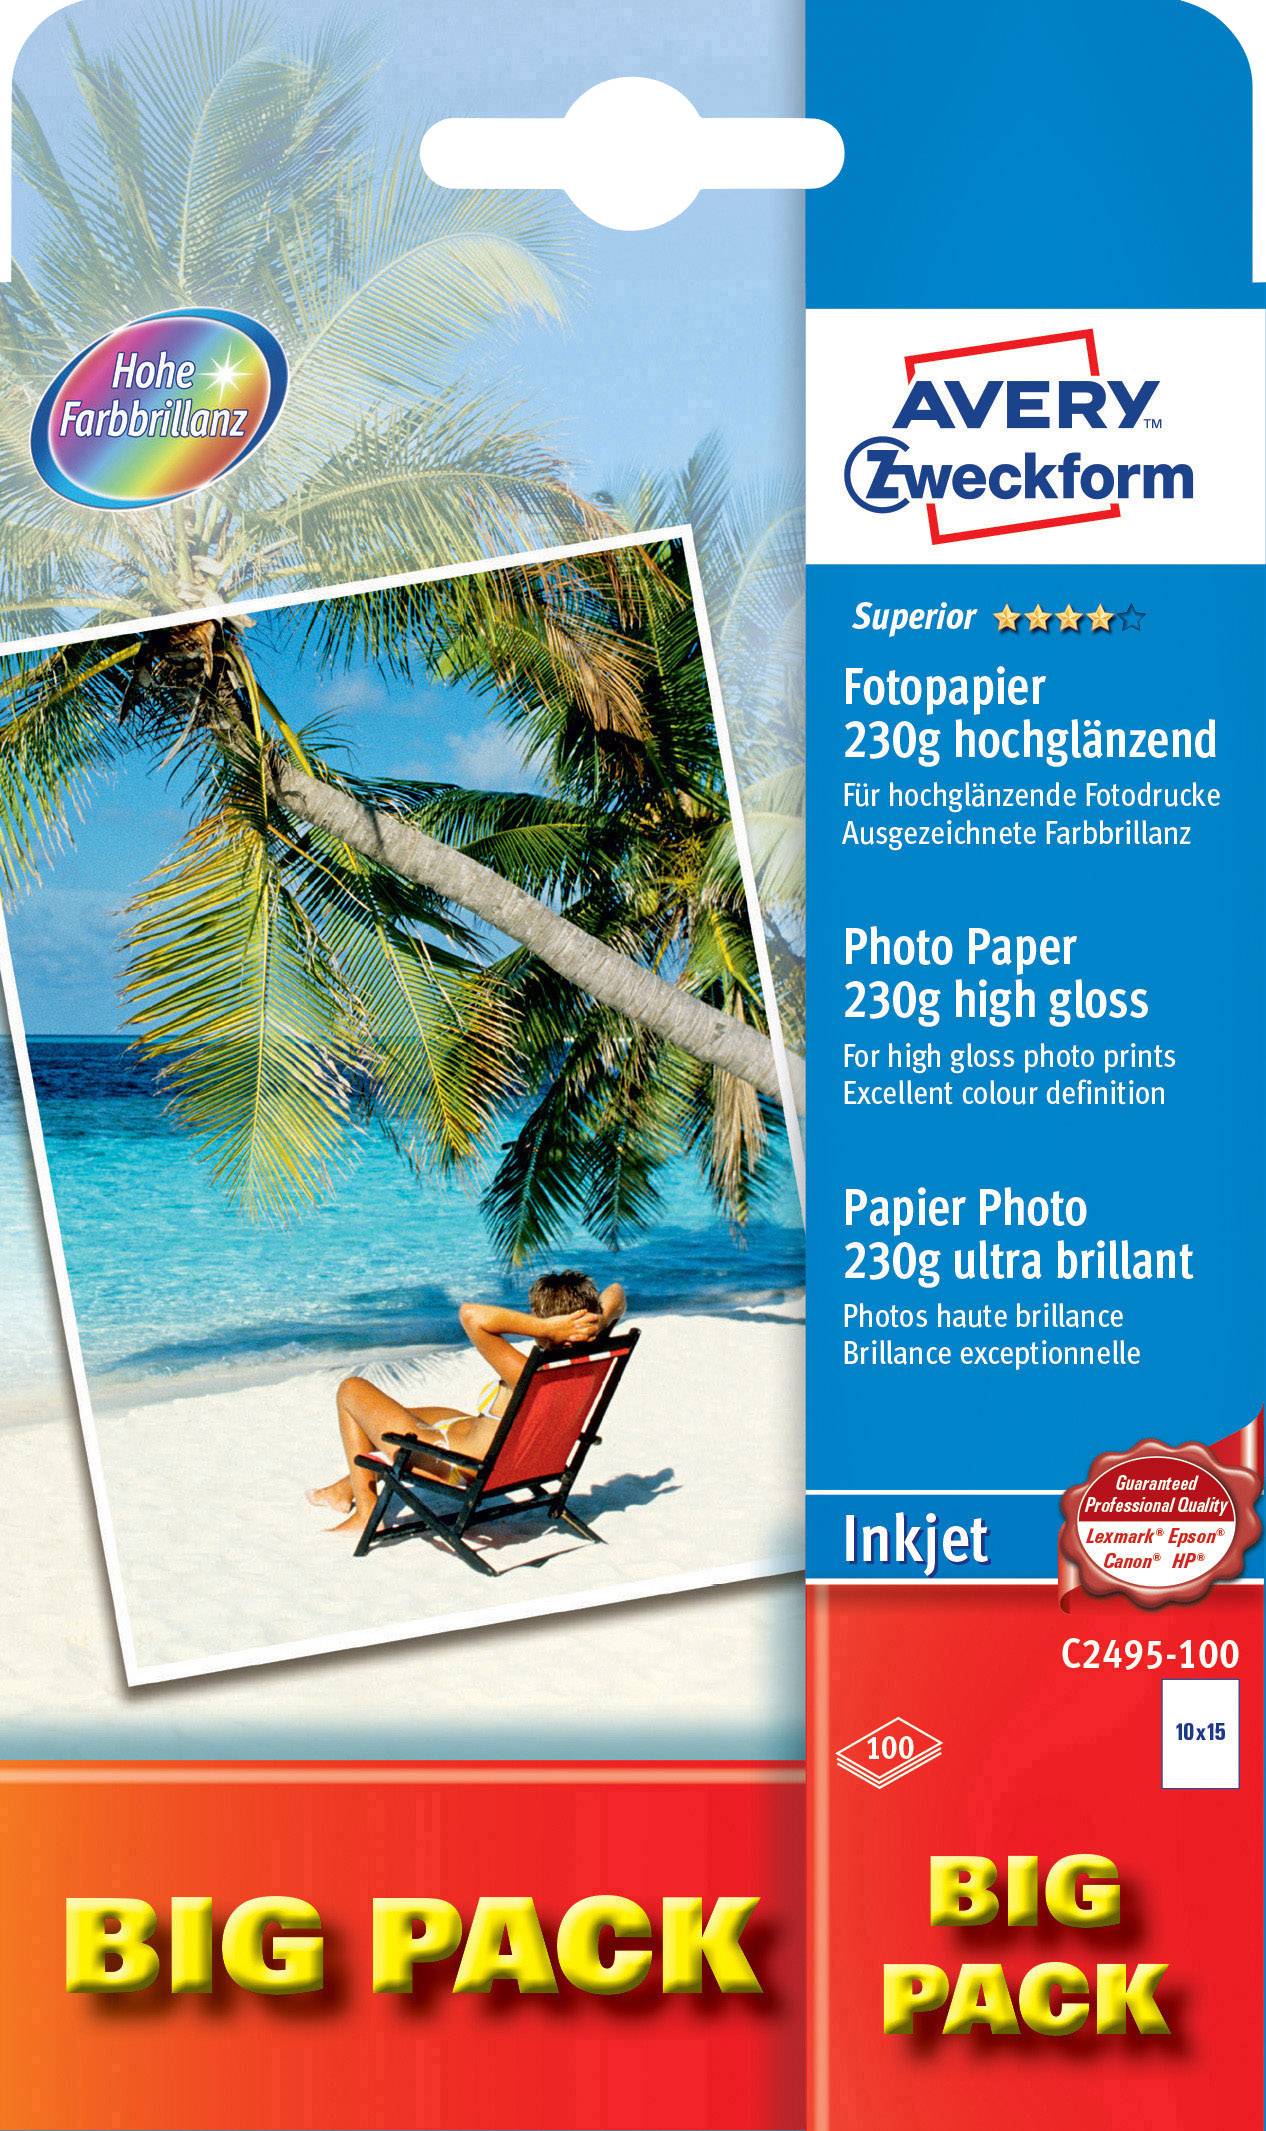 ZWECKFORM Fotopapier Avery-Zweckform Superior Photo Paper Inkjet C2495-100 10 x 15 cm 230 g/m² 100 B